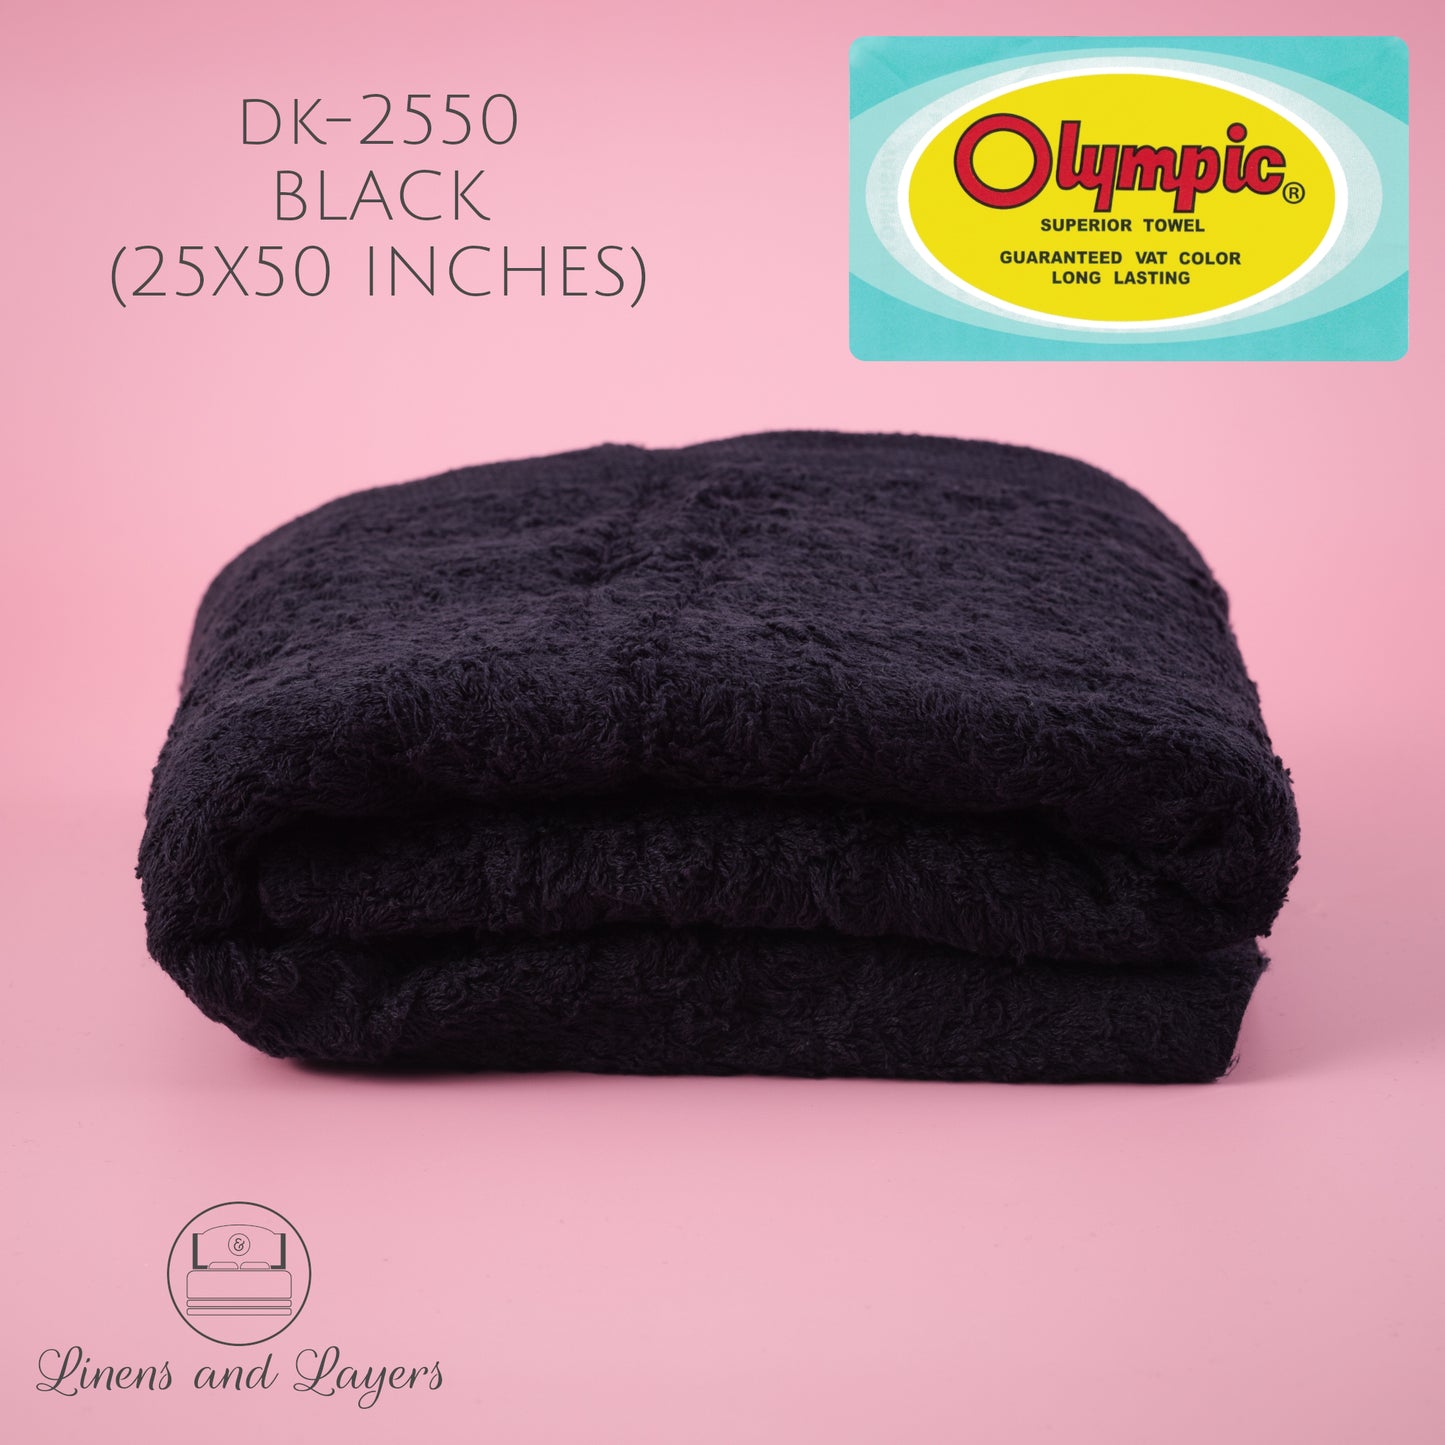 Olympic Black Bath Towel / Salon Towel / Spa Towel (470 GSM) - DK-2550 Terrycloth - 25x50 inches